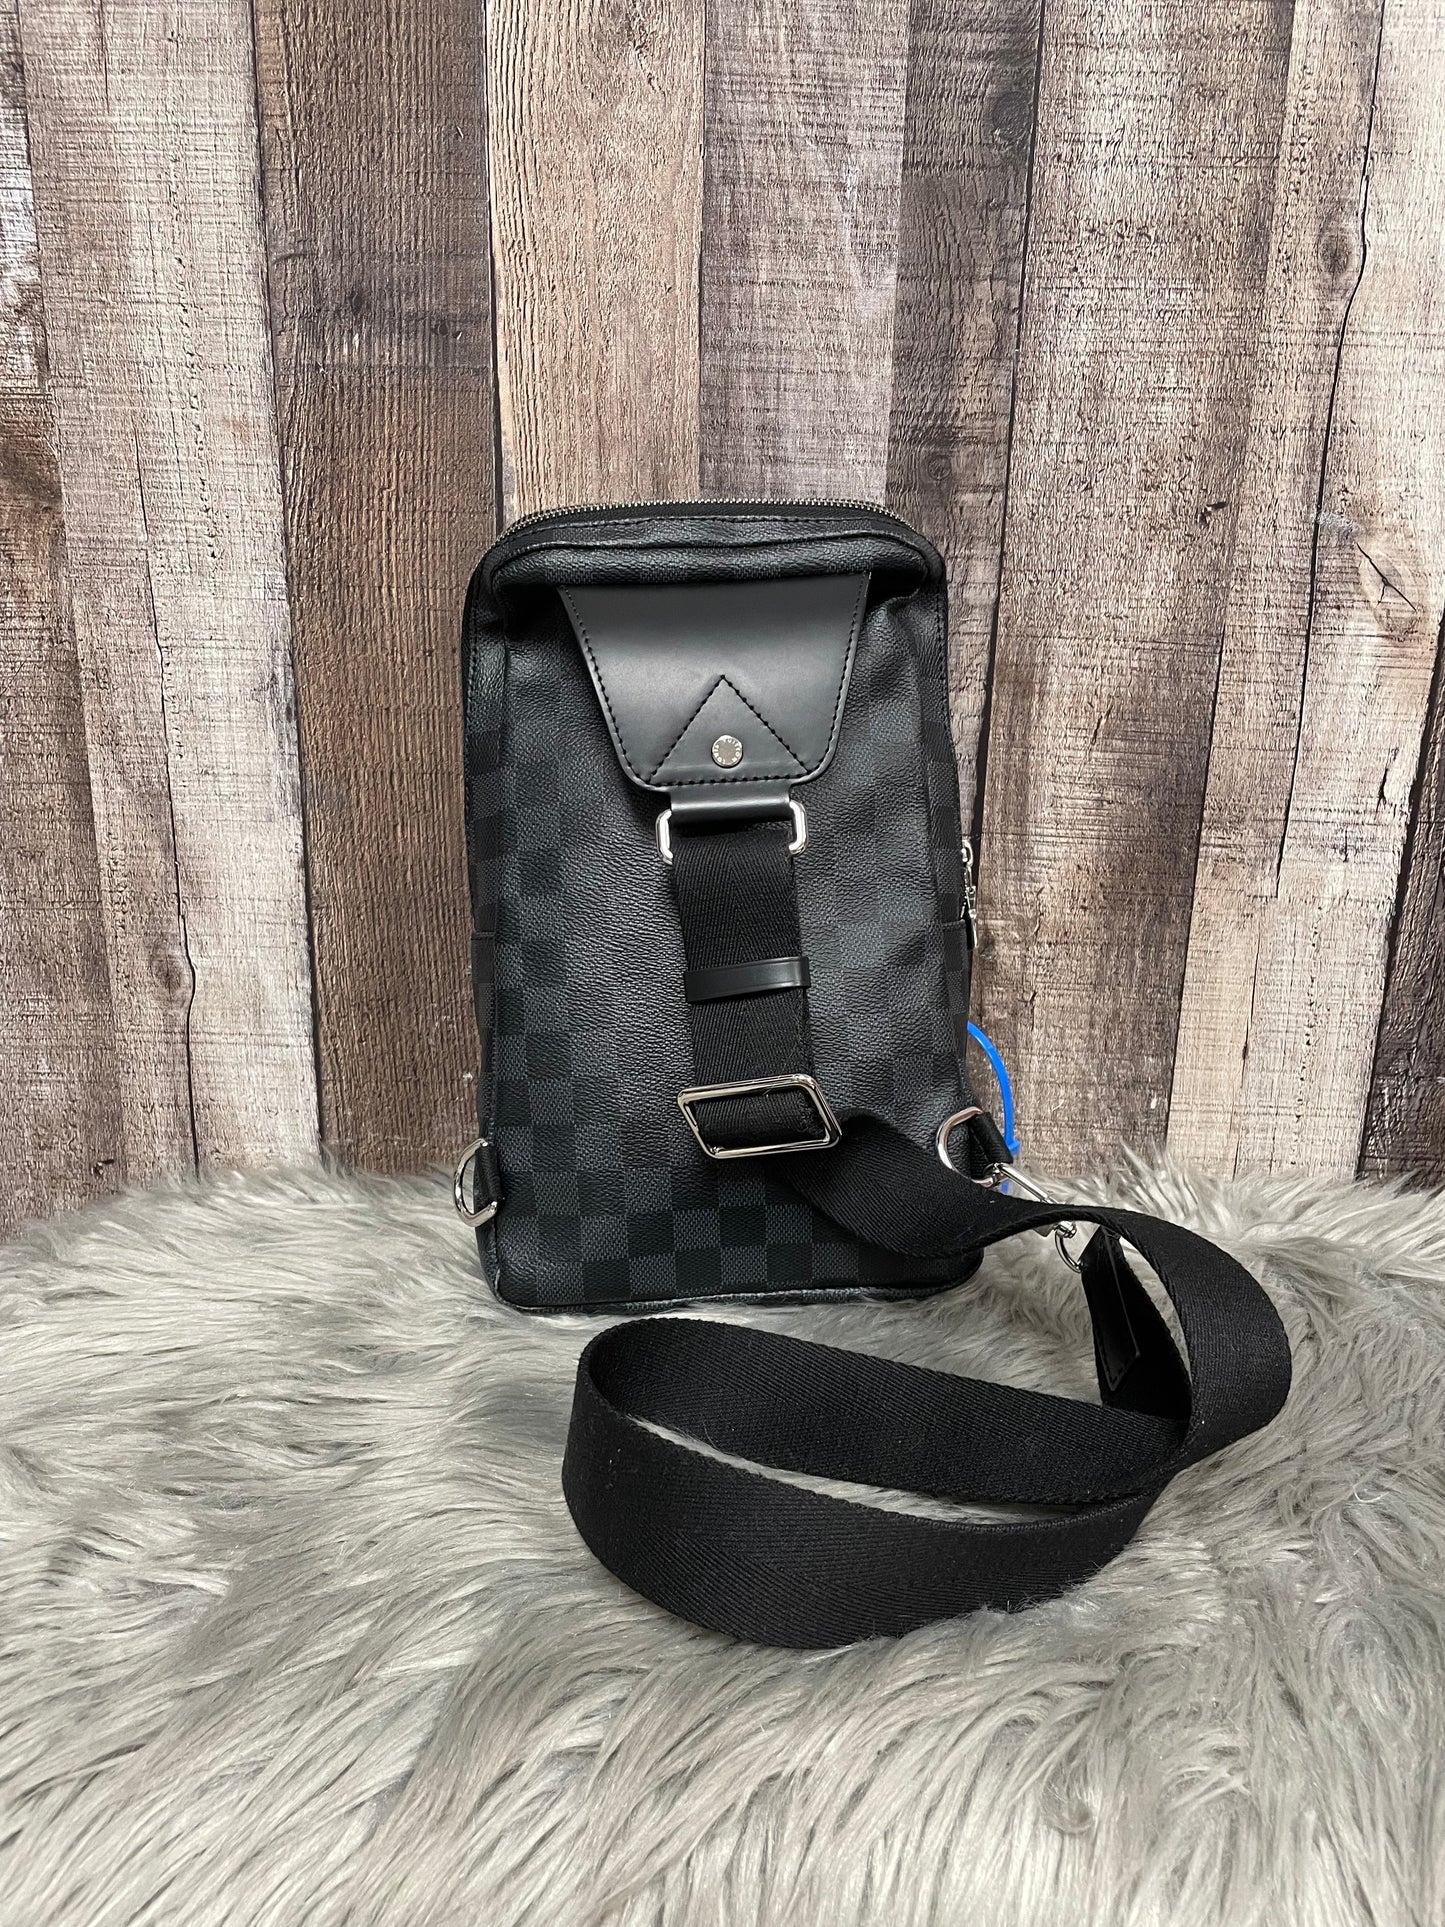 Backpack Luxury Designer Louis Vuitton, Size Medium